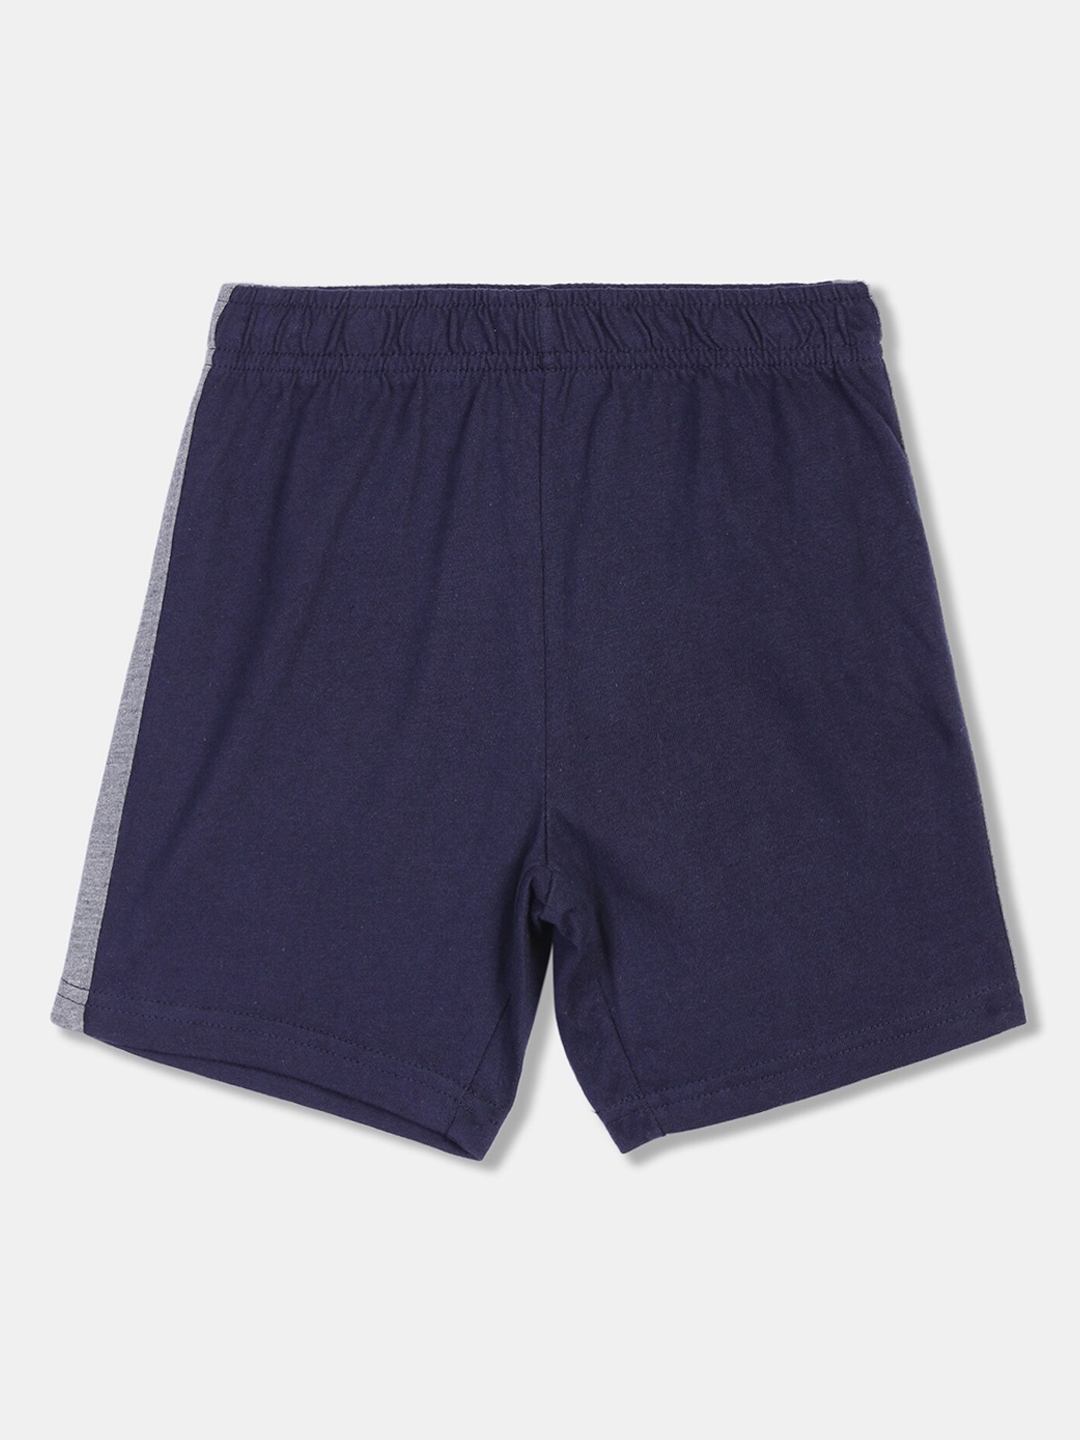 Buy The Childrens Place Boys Navy Blue Solid Regular Fit Regular Shorts ...